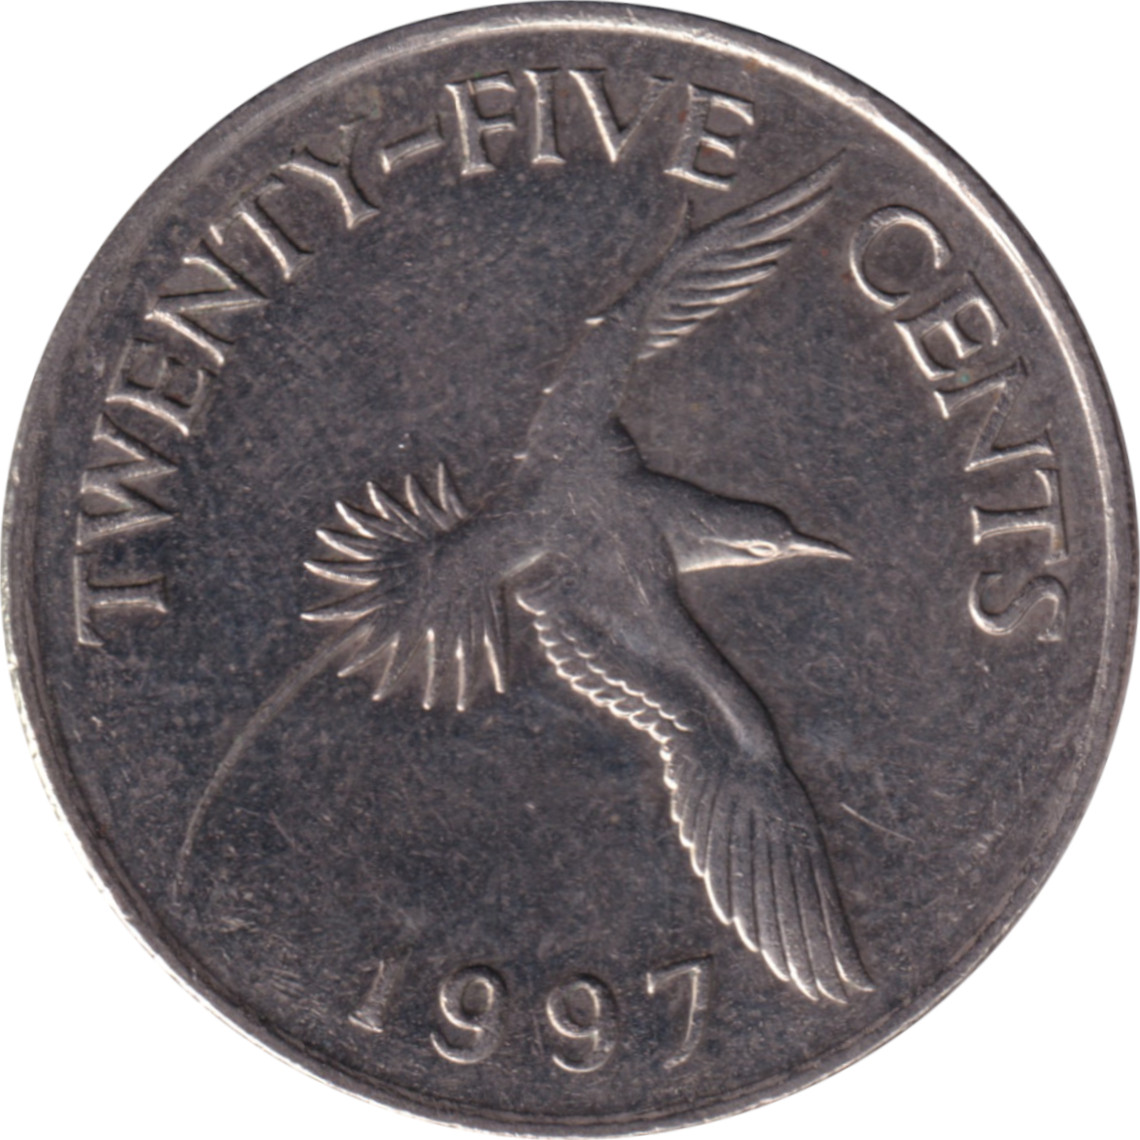 25 cents - Elizabeth II - Mature head